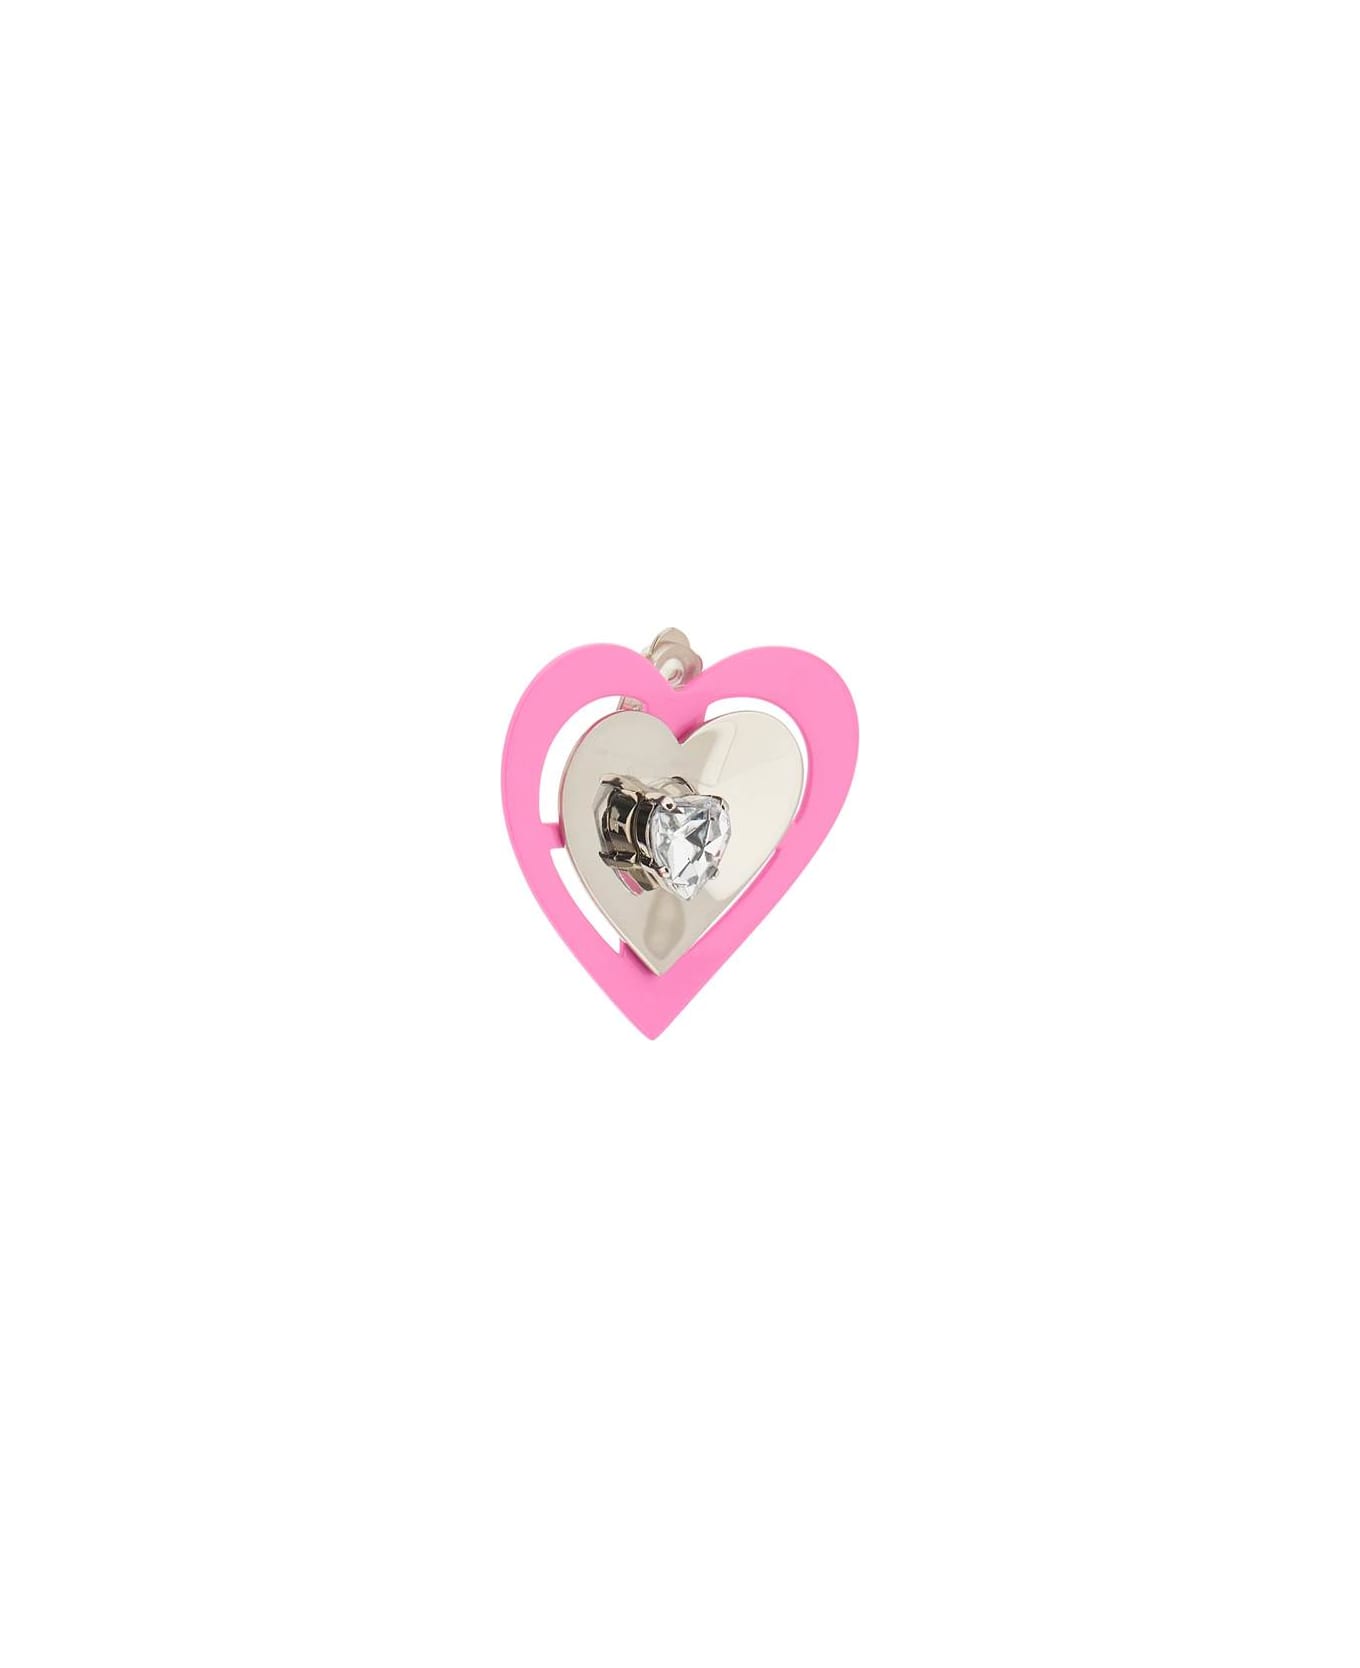 SafSafu 'pink Neon Heart' Clip-on Earrings - PINK (Silver)